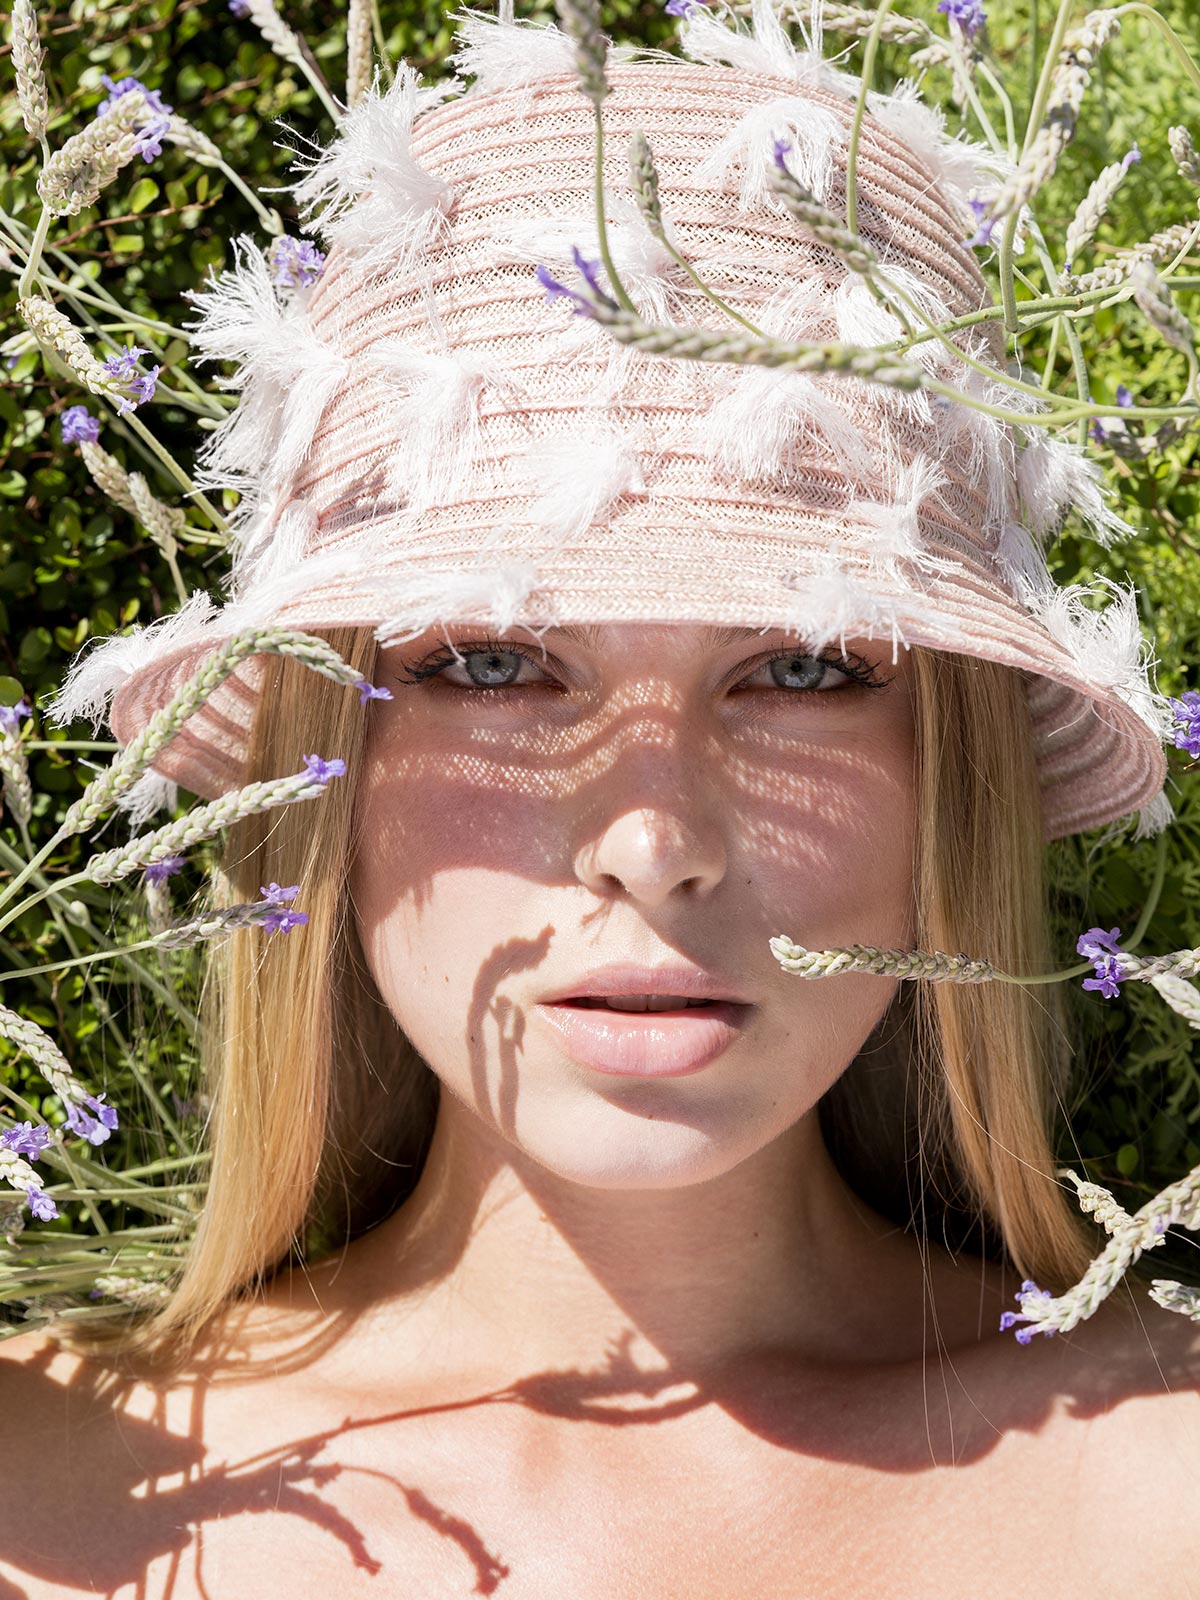 Cloche Bon Effiloche 100% Capri pink and white straw hat worn by model